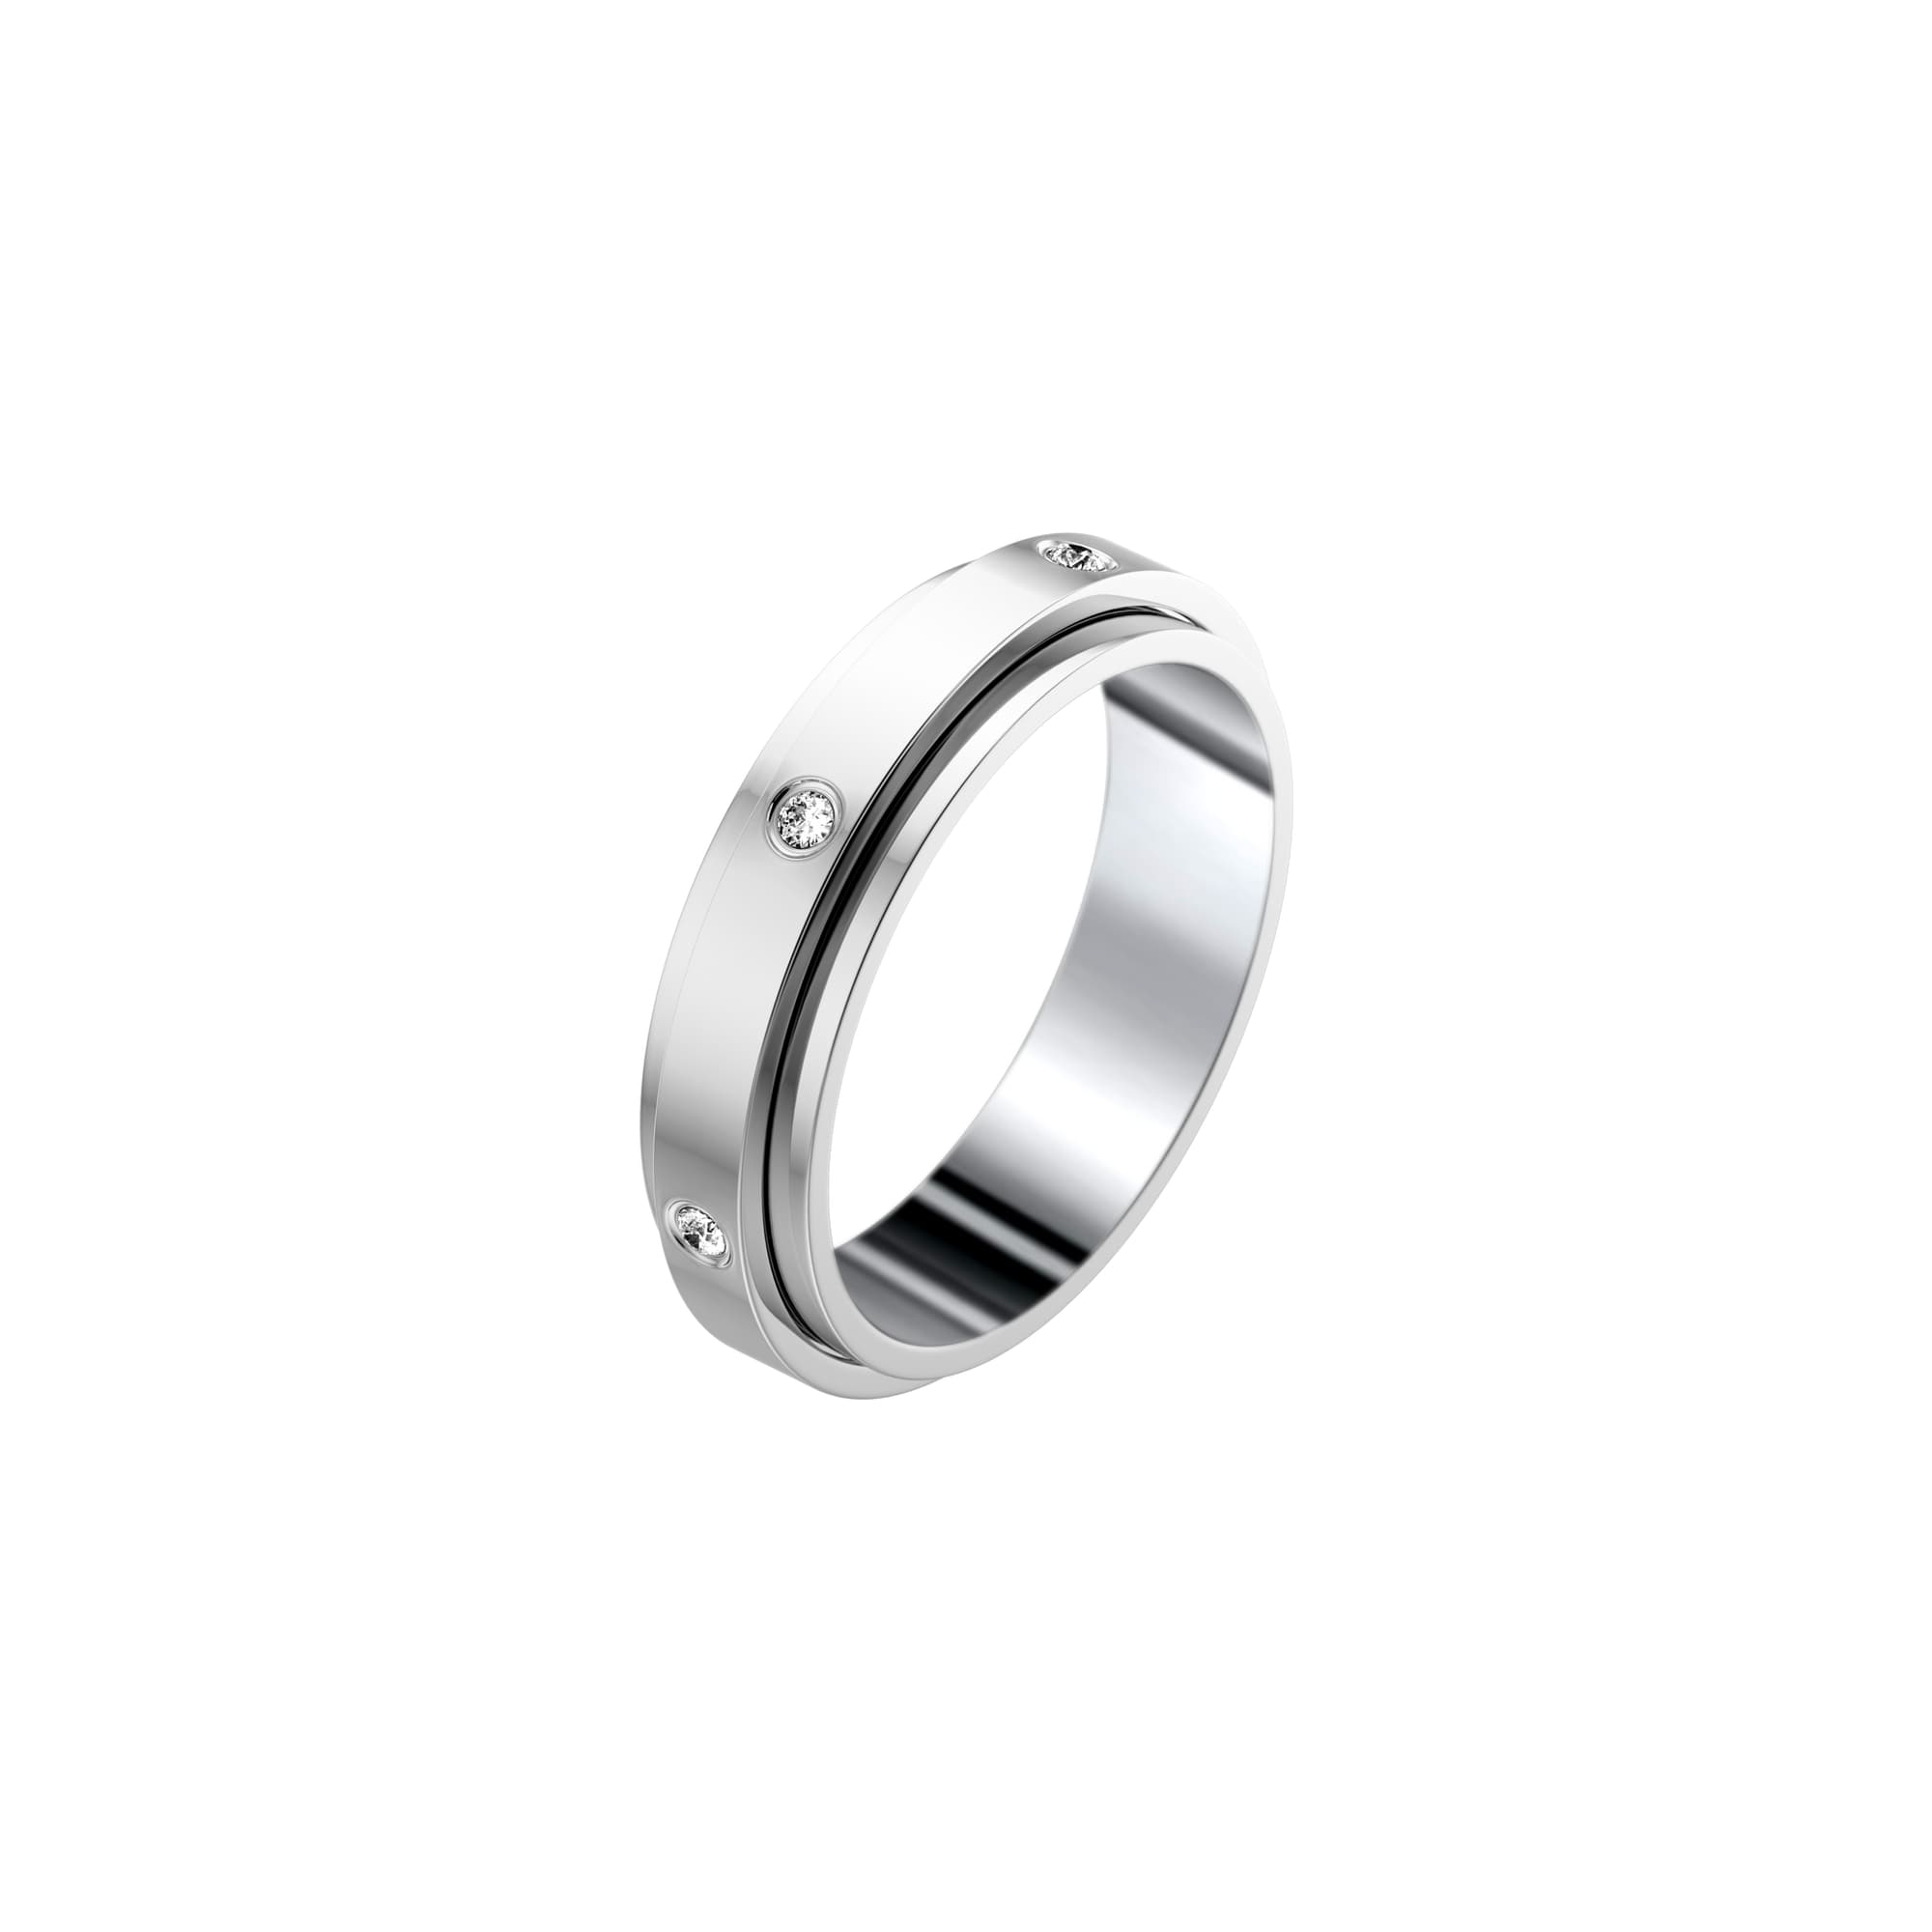 Platinum Diamond Wedding Ring G34PT300 - Piaget Wedding Jewelry Online